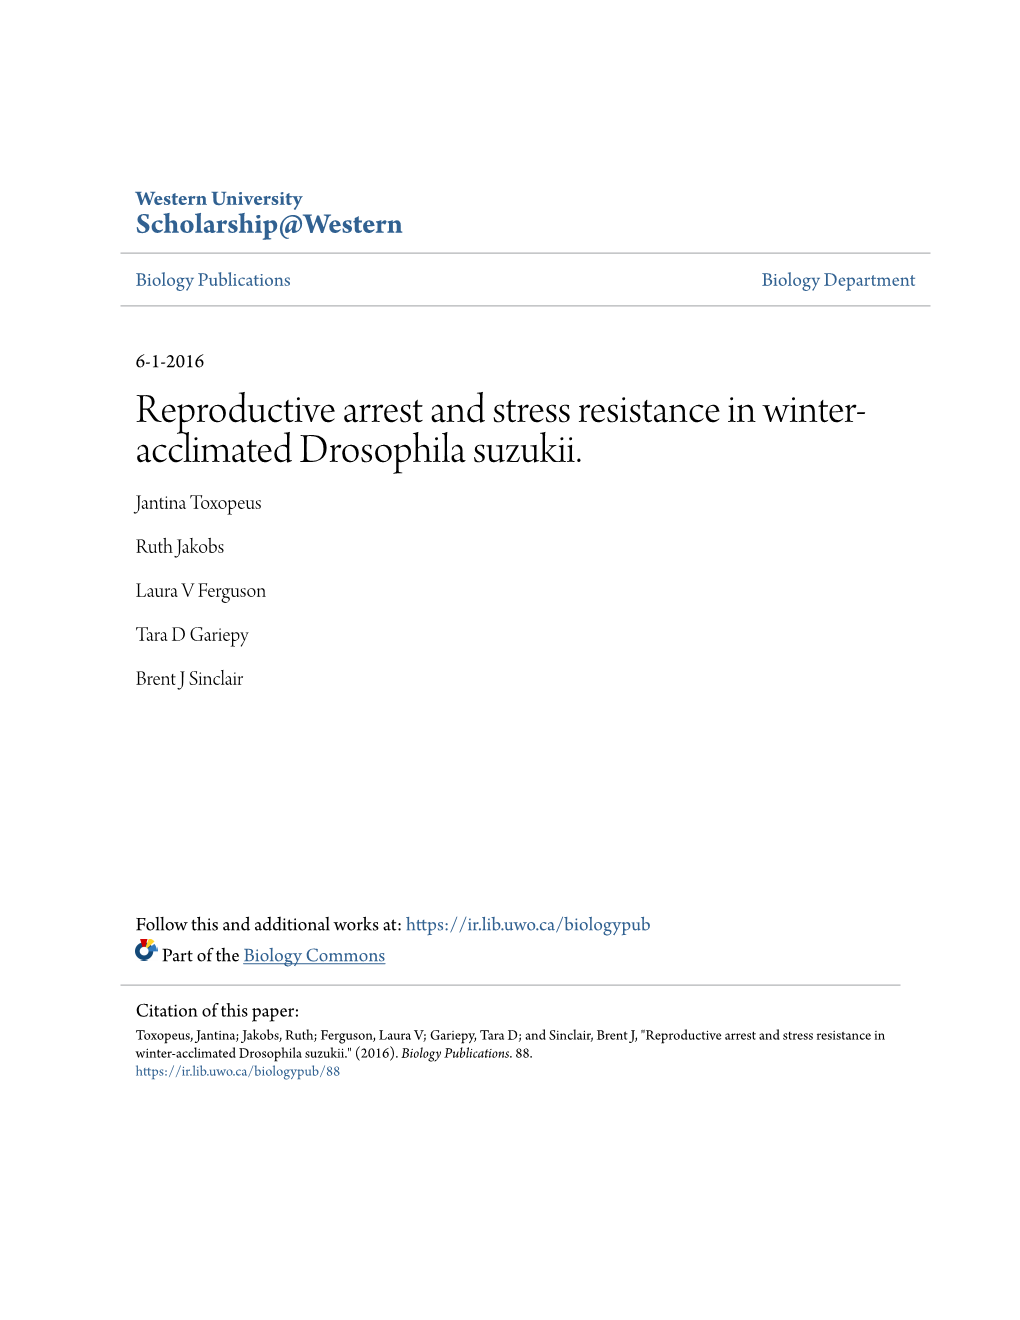 Reproductive Arrest and Stress Resistance in Winter-Acclimated Drosophila Suzukii." (2016)